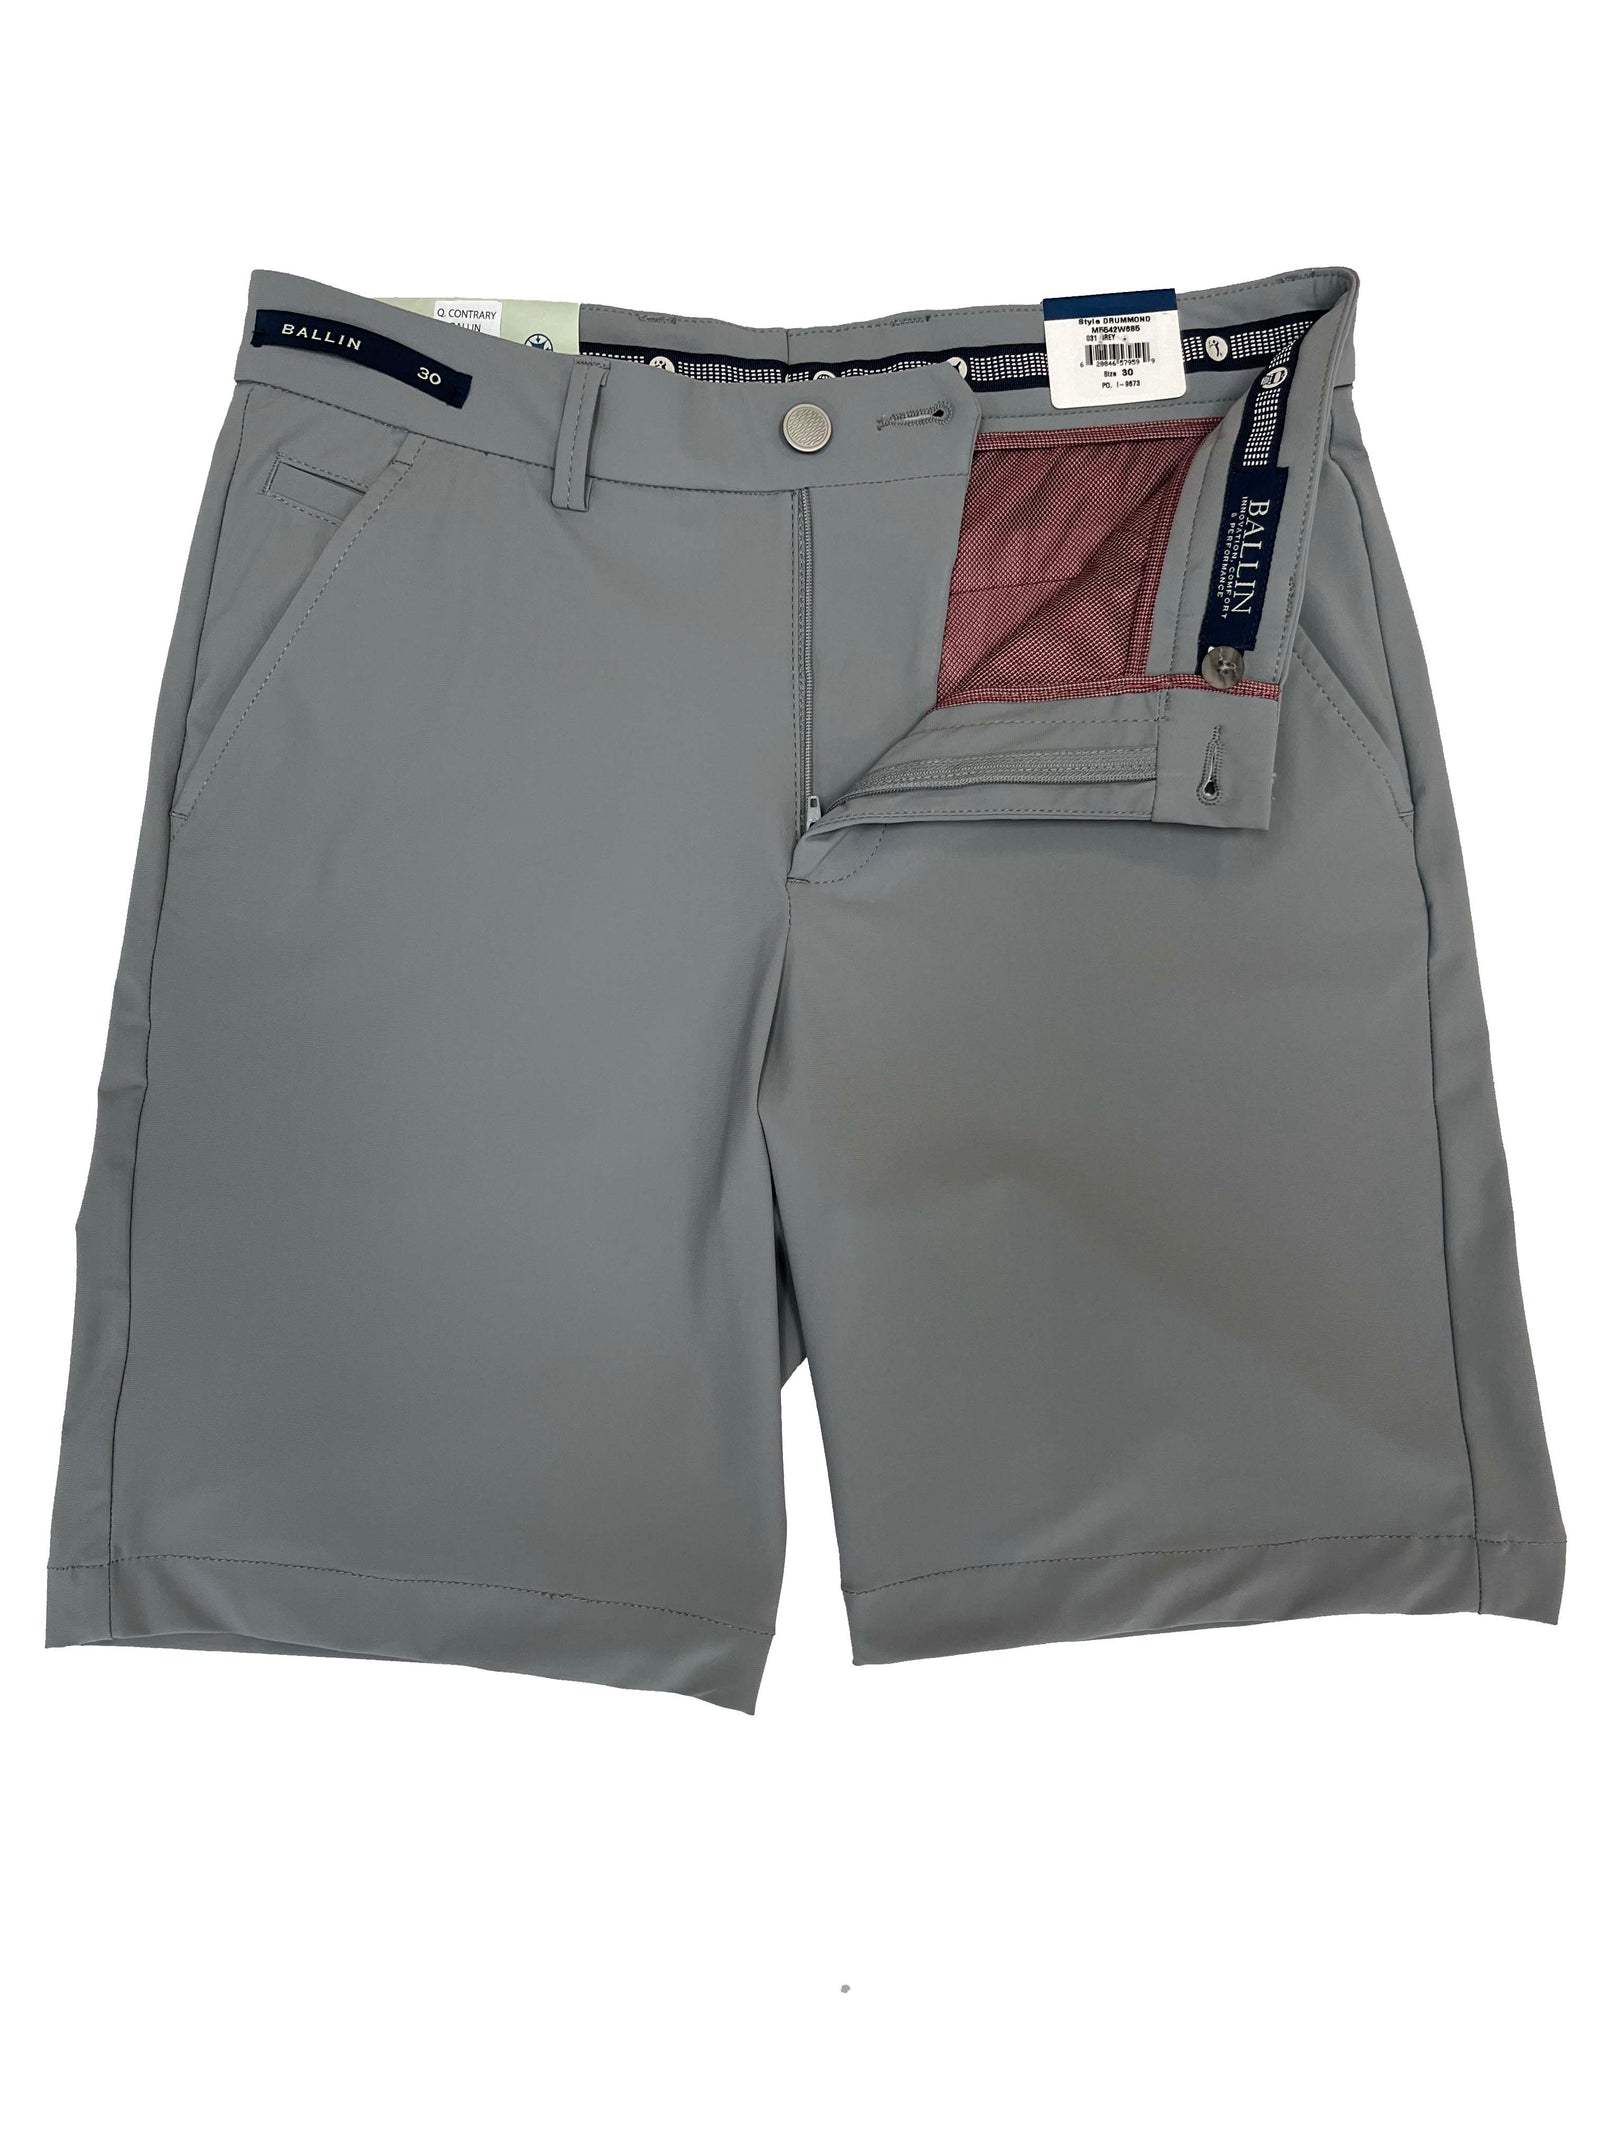 Filson - Granite Mountain 9 Shorts - Mud 30